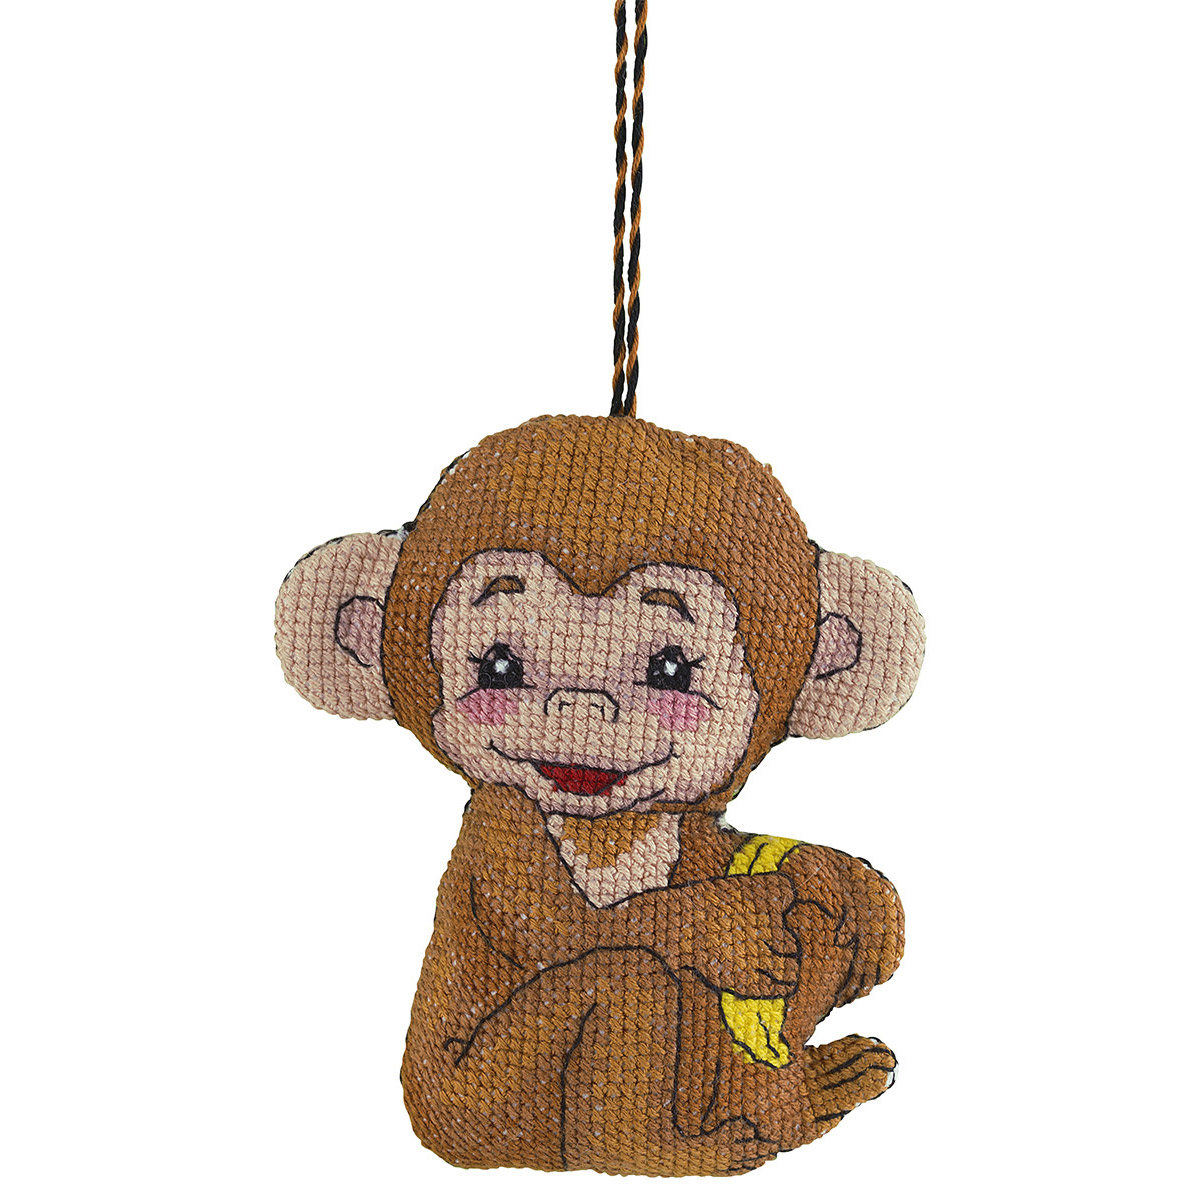 Embroidery kits PANNA IG-1728 Toy. Monkey 